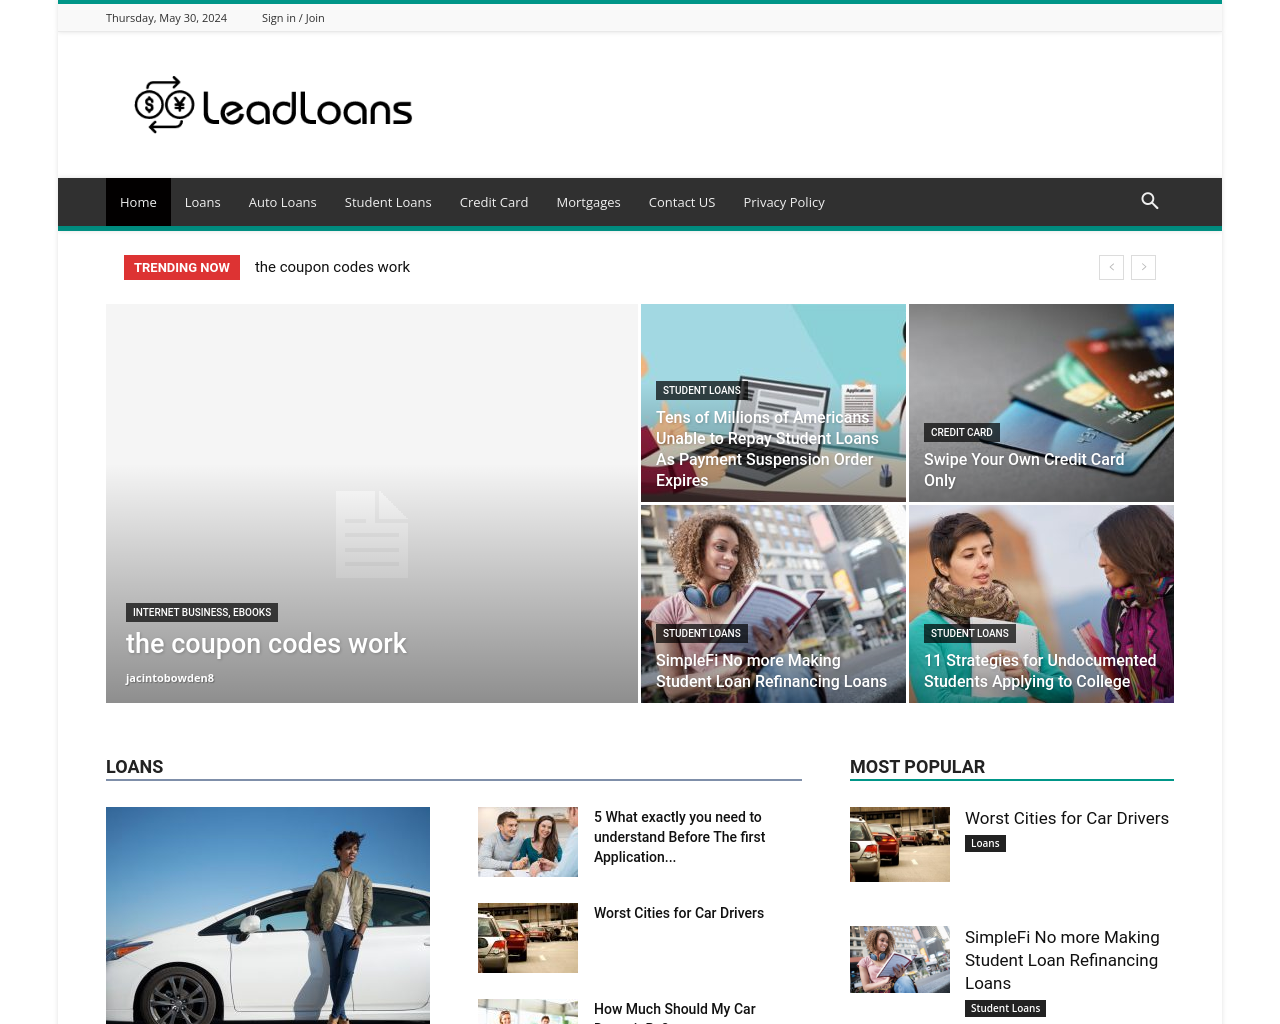 leadloans.co.uk